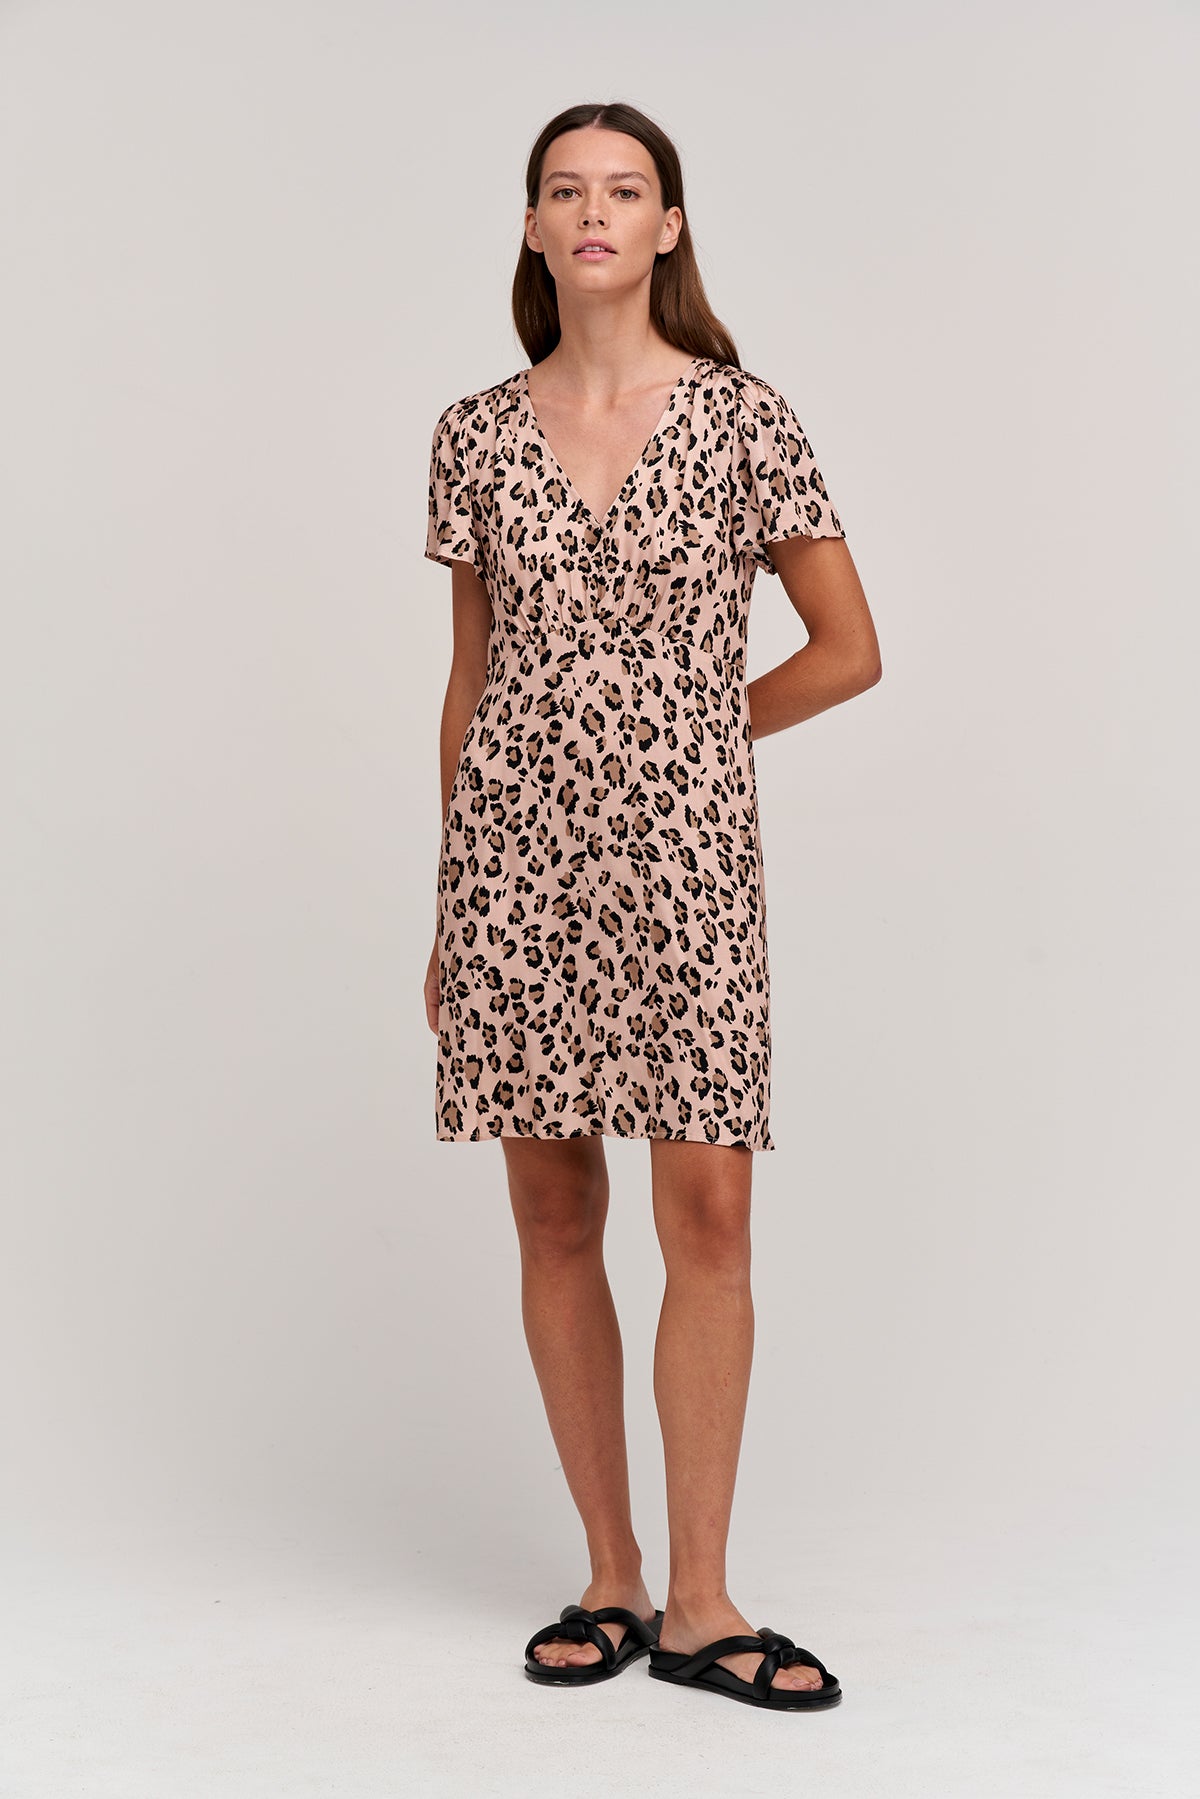 Drew Cheetah Print Dress in blush front-25052881322177